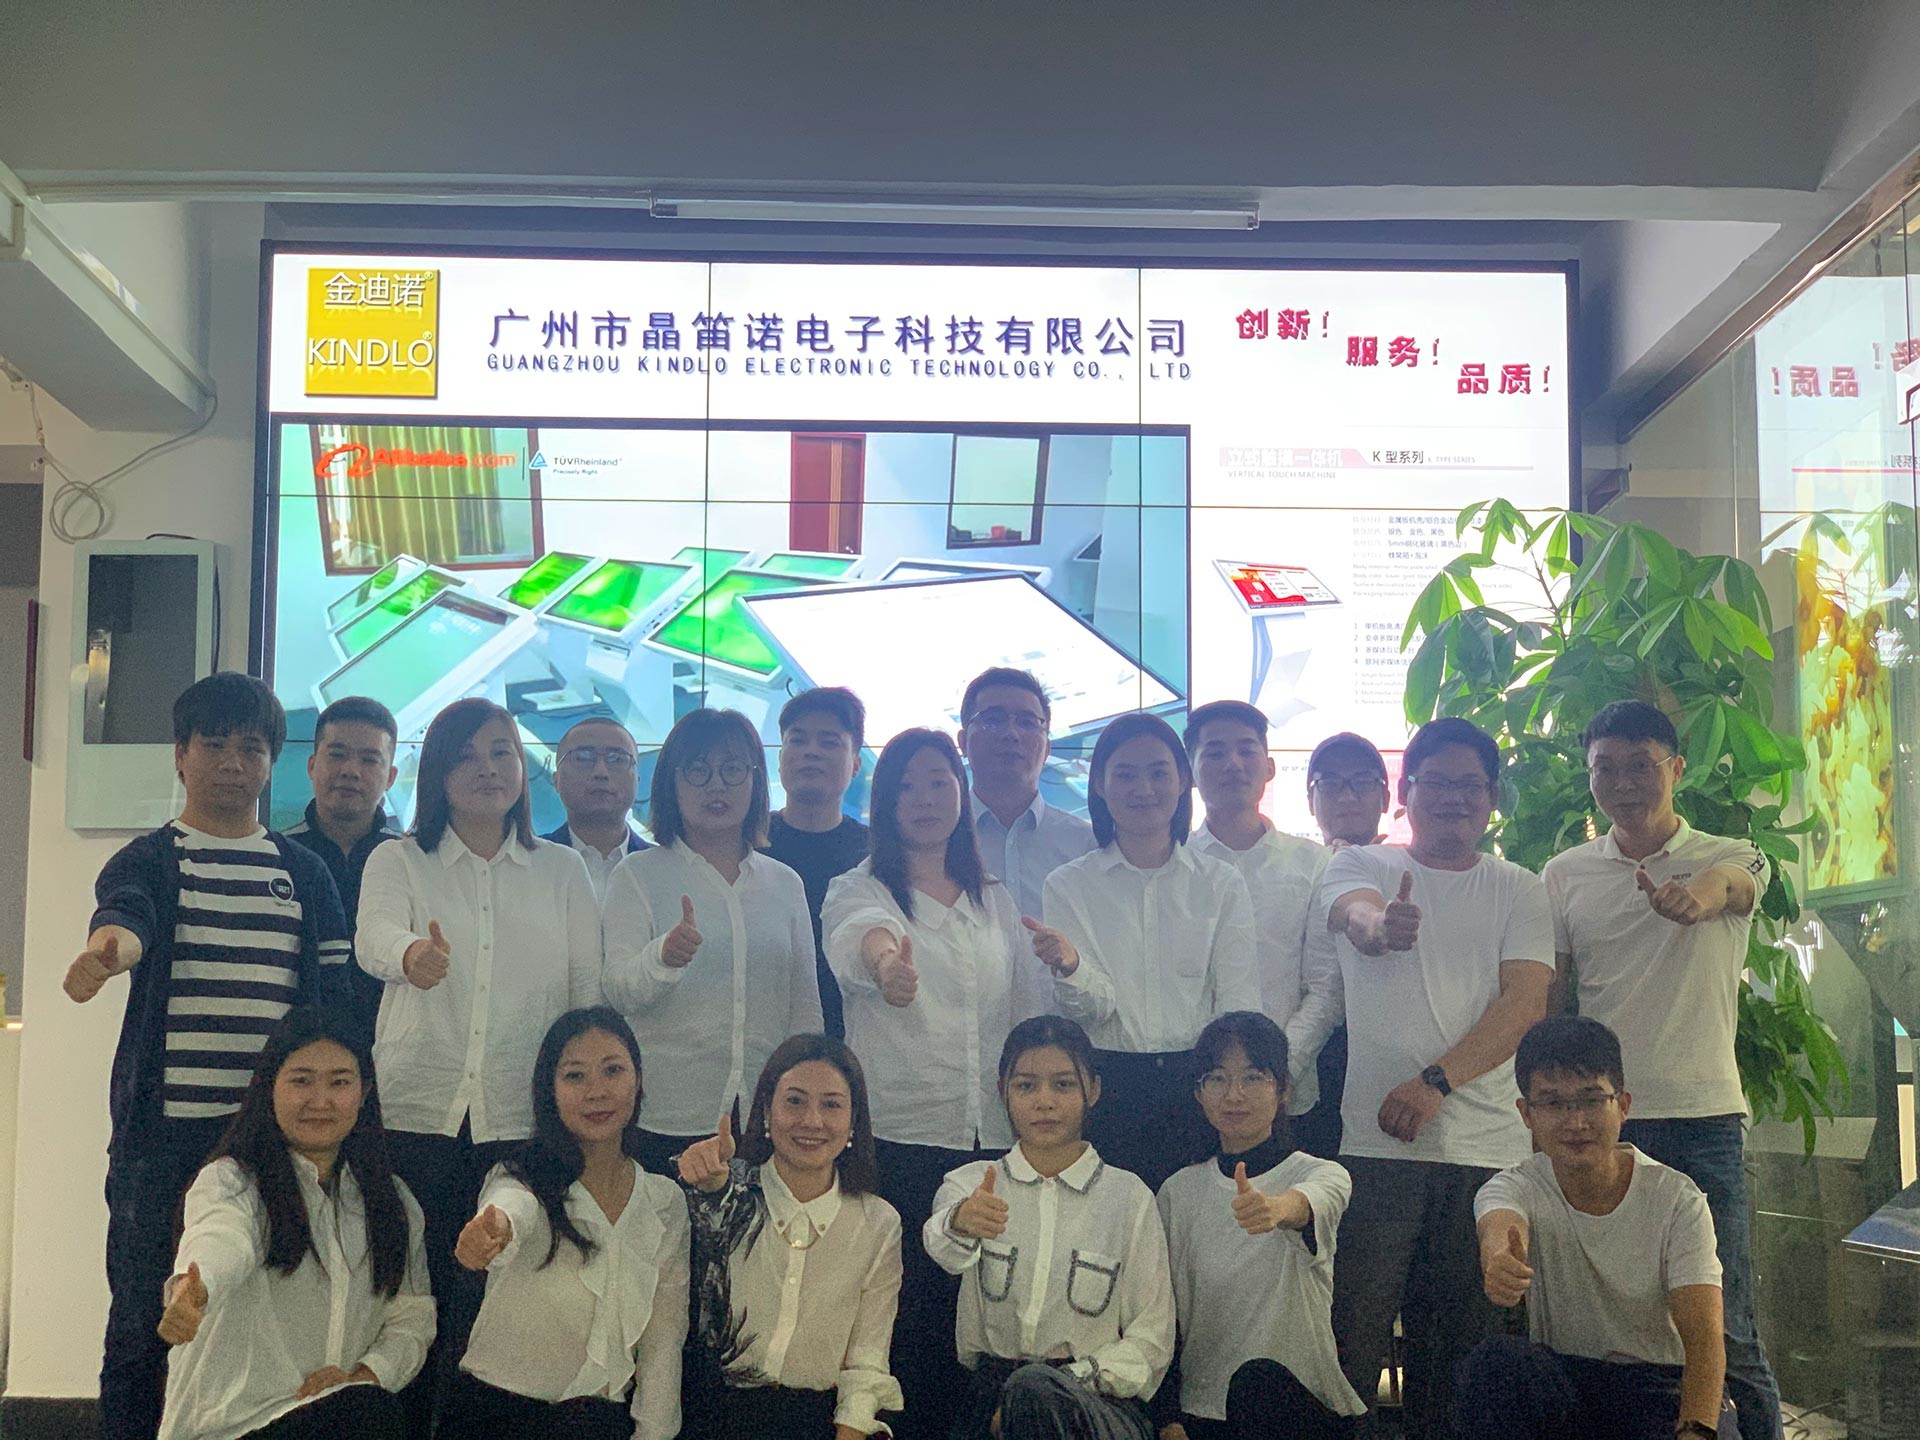 الصين Guangzhou Jingdinuo Electronic Technology Co., Ltd. ملف الشركة